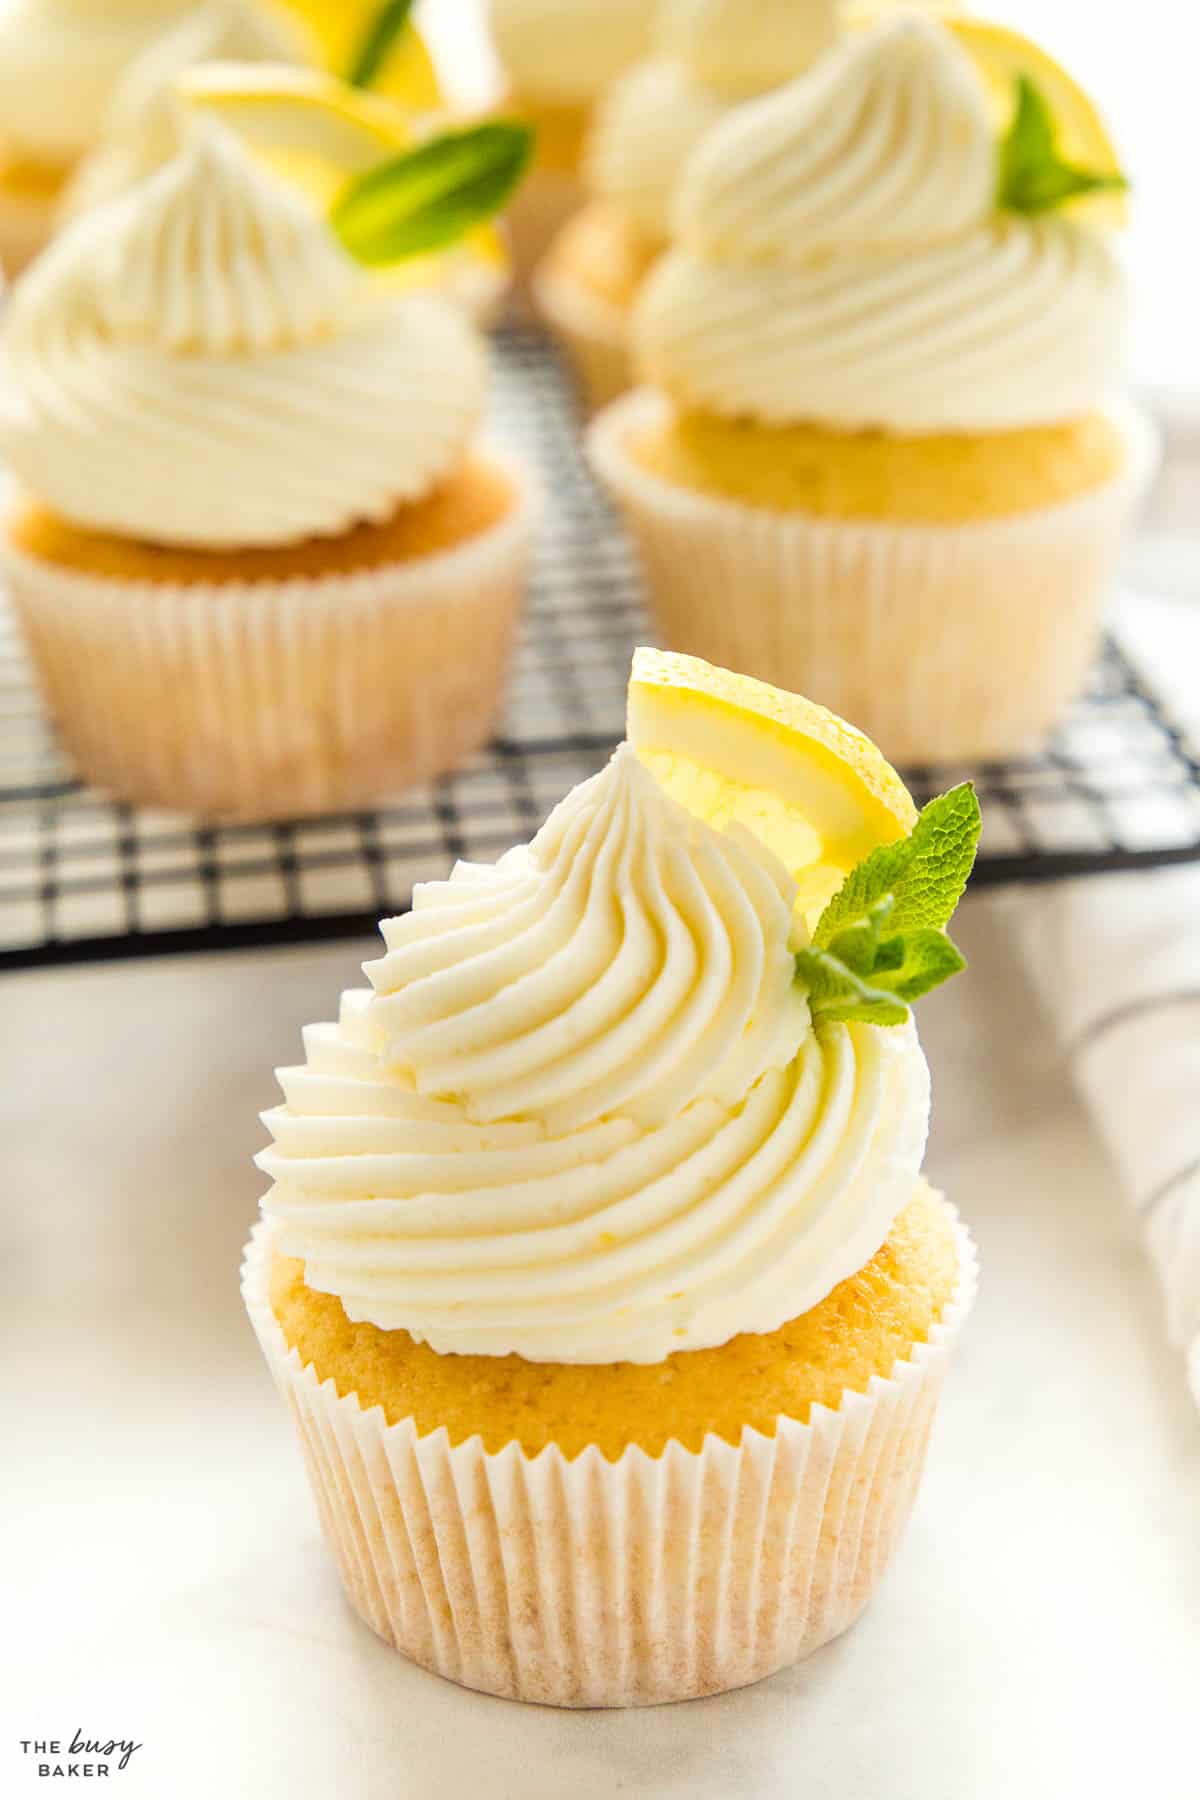 closeup image: lemon cupcake with lemon and mint leaves